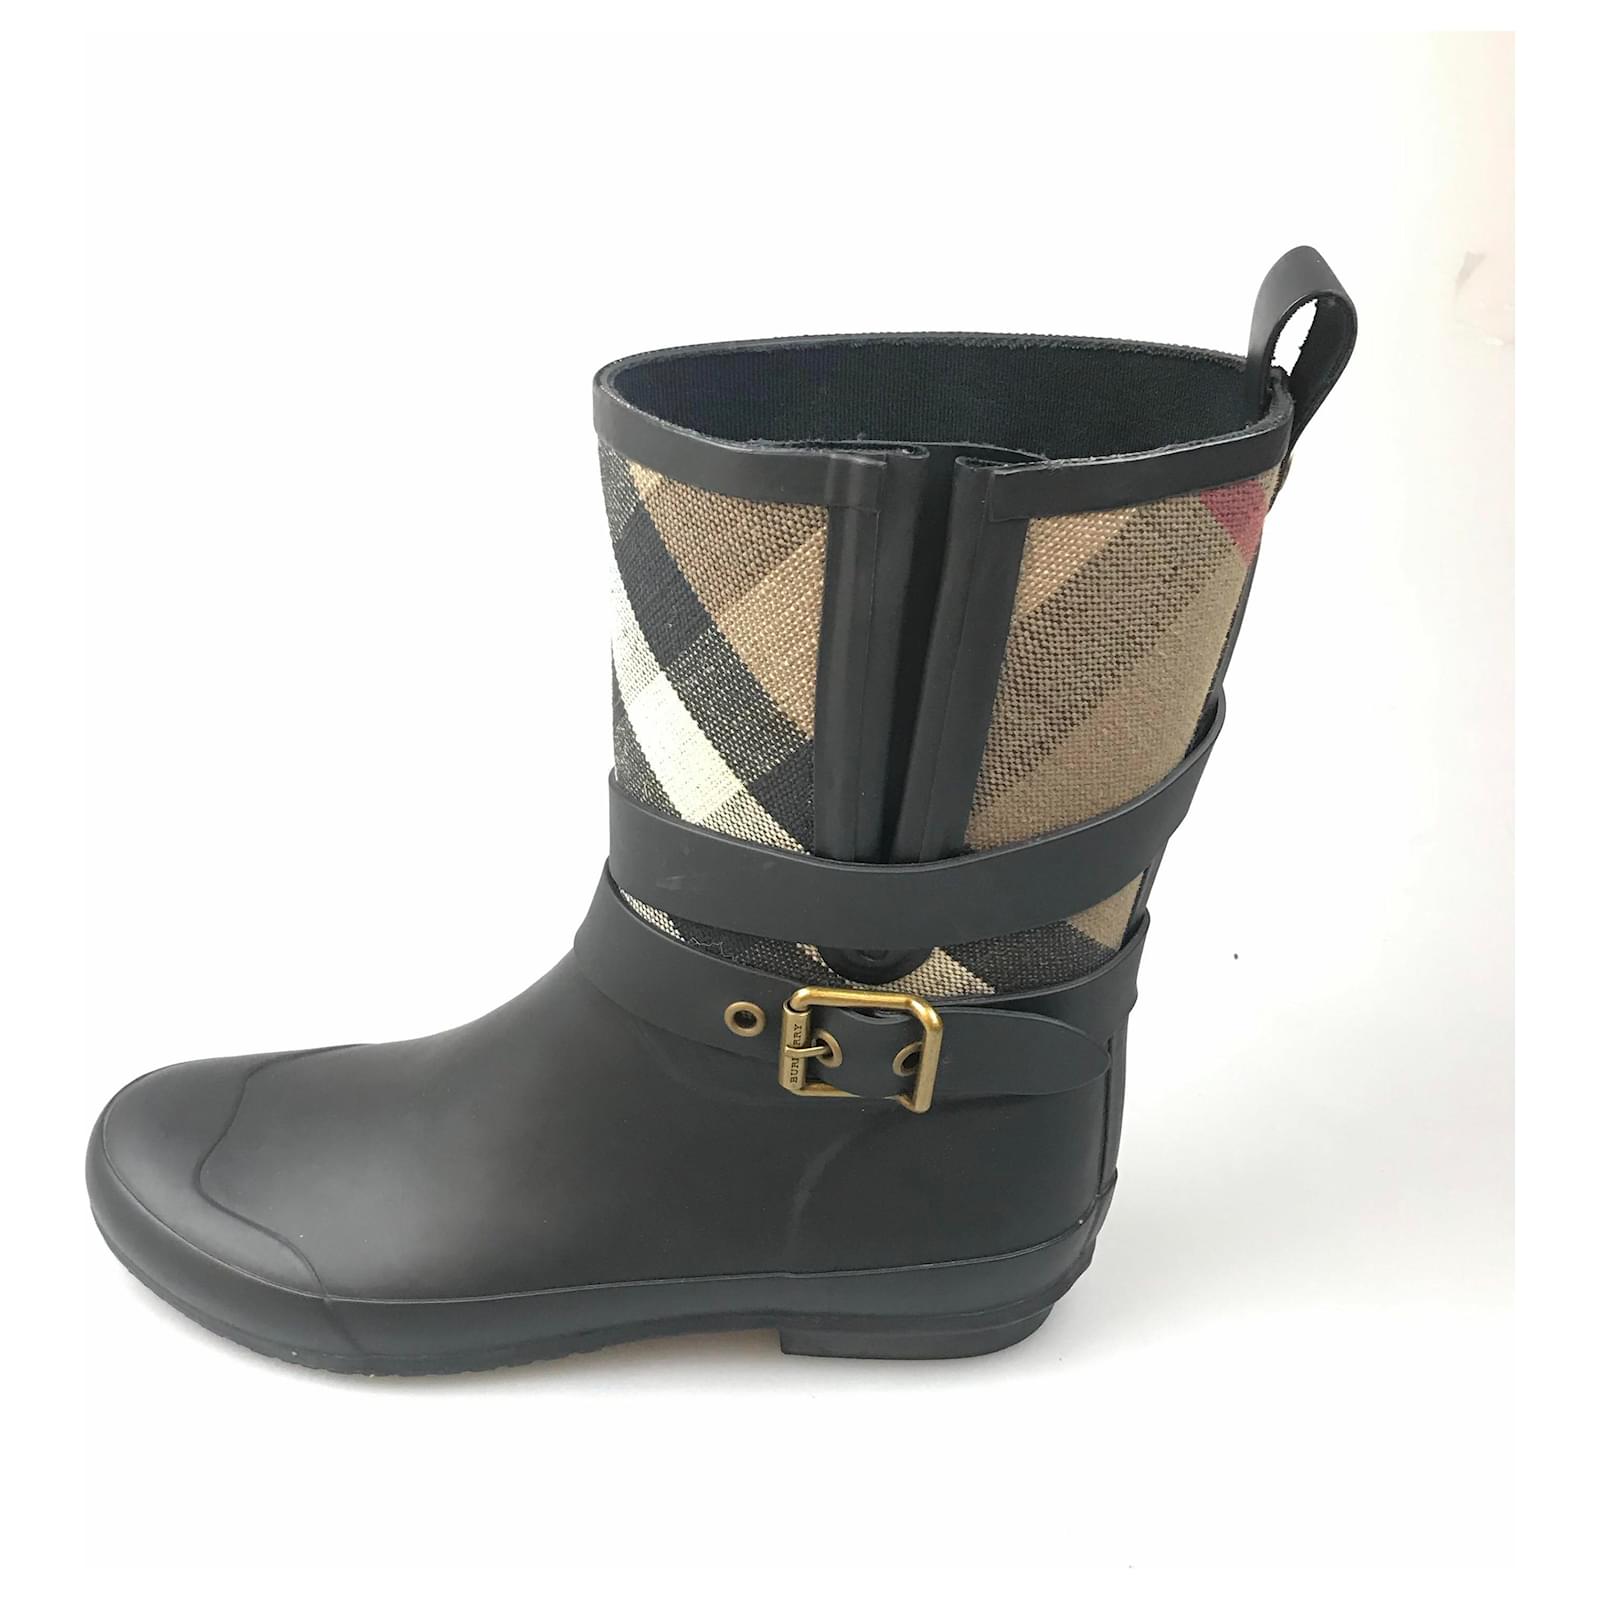 Burberry Women's Rubber Rain Boots